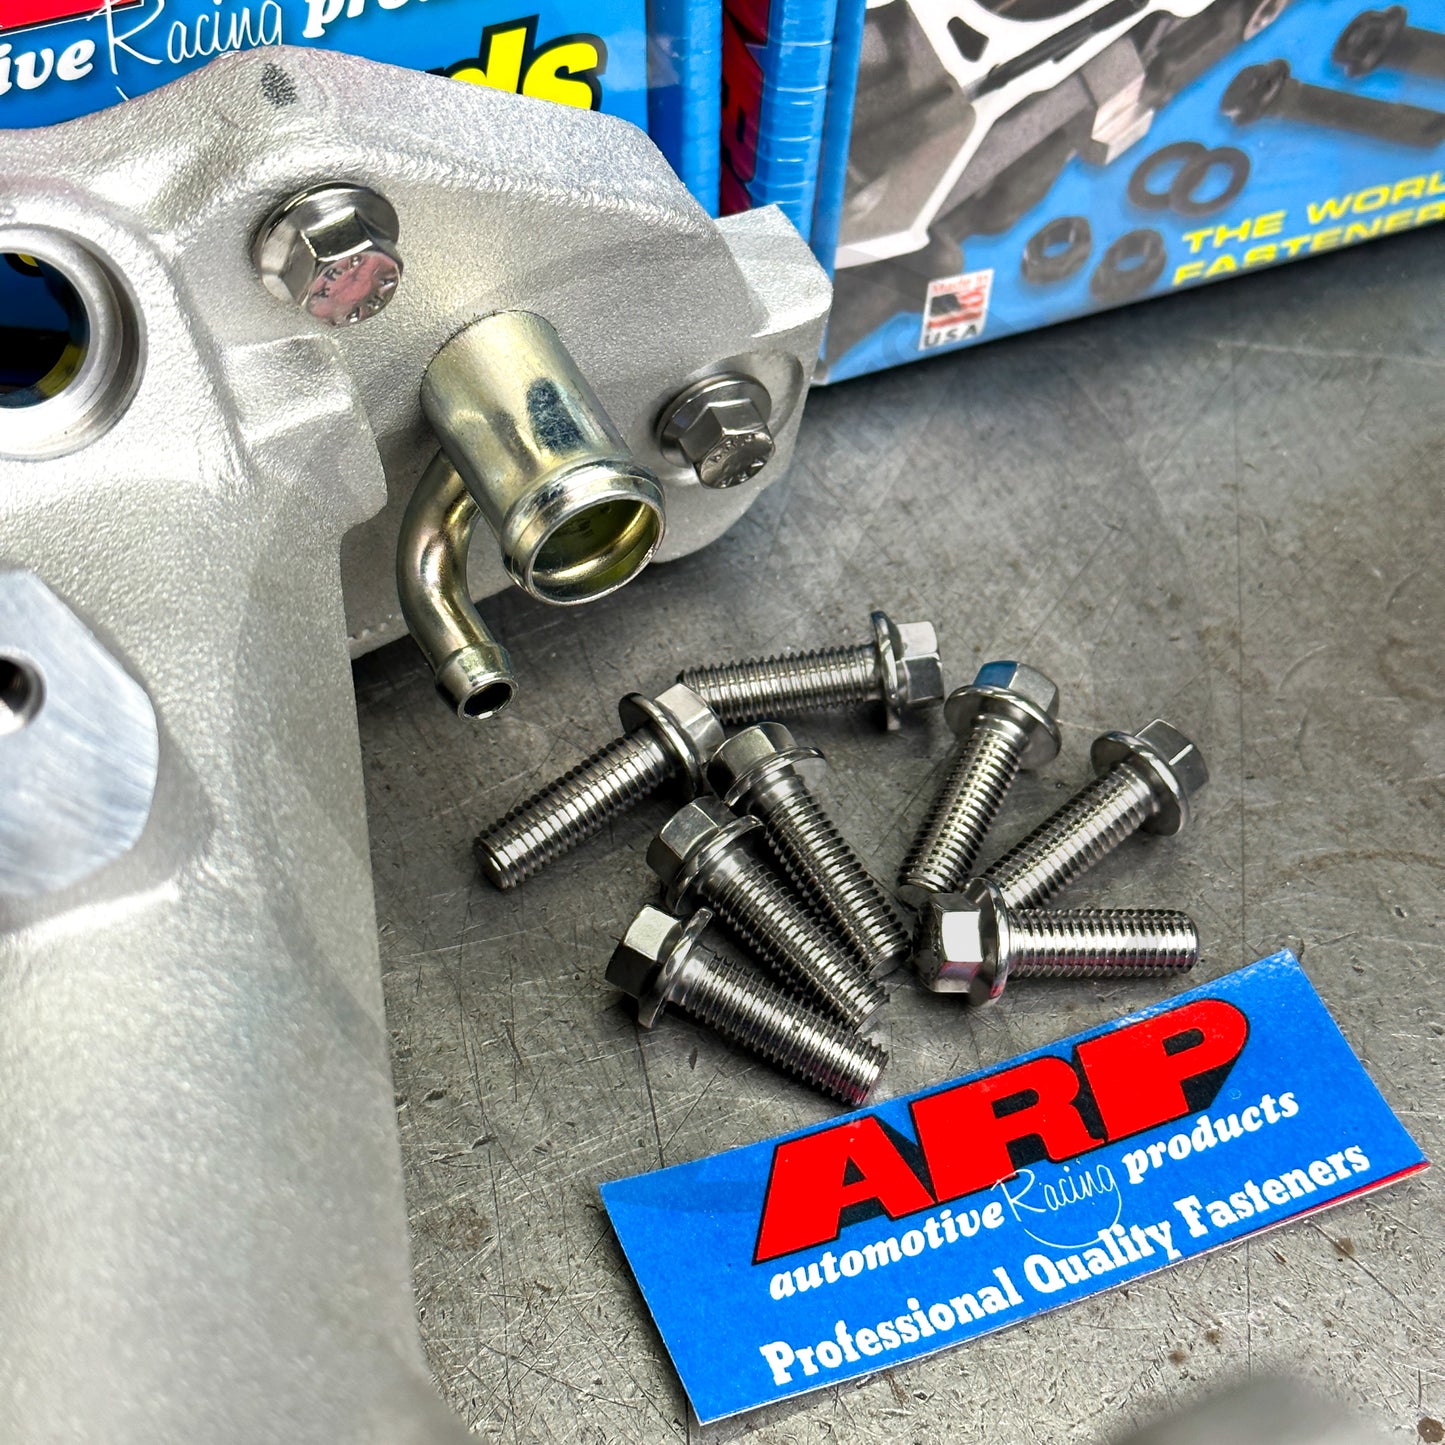 ARP Stainless Steel Intake Manifold Bolt Kit for Honda Acura B Series and D Series Motor D16 B16 B18 B20